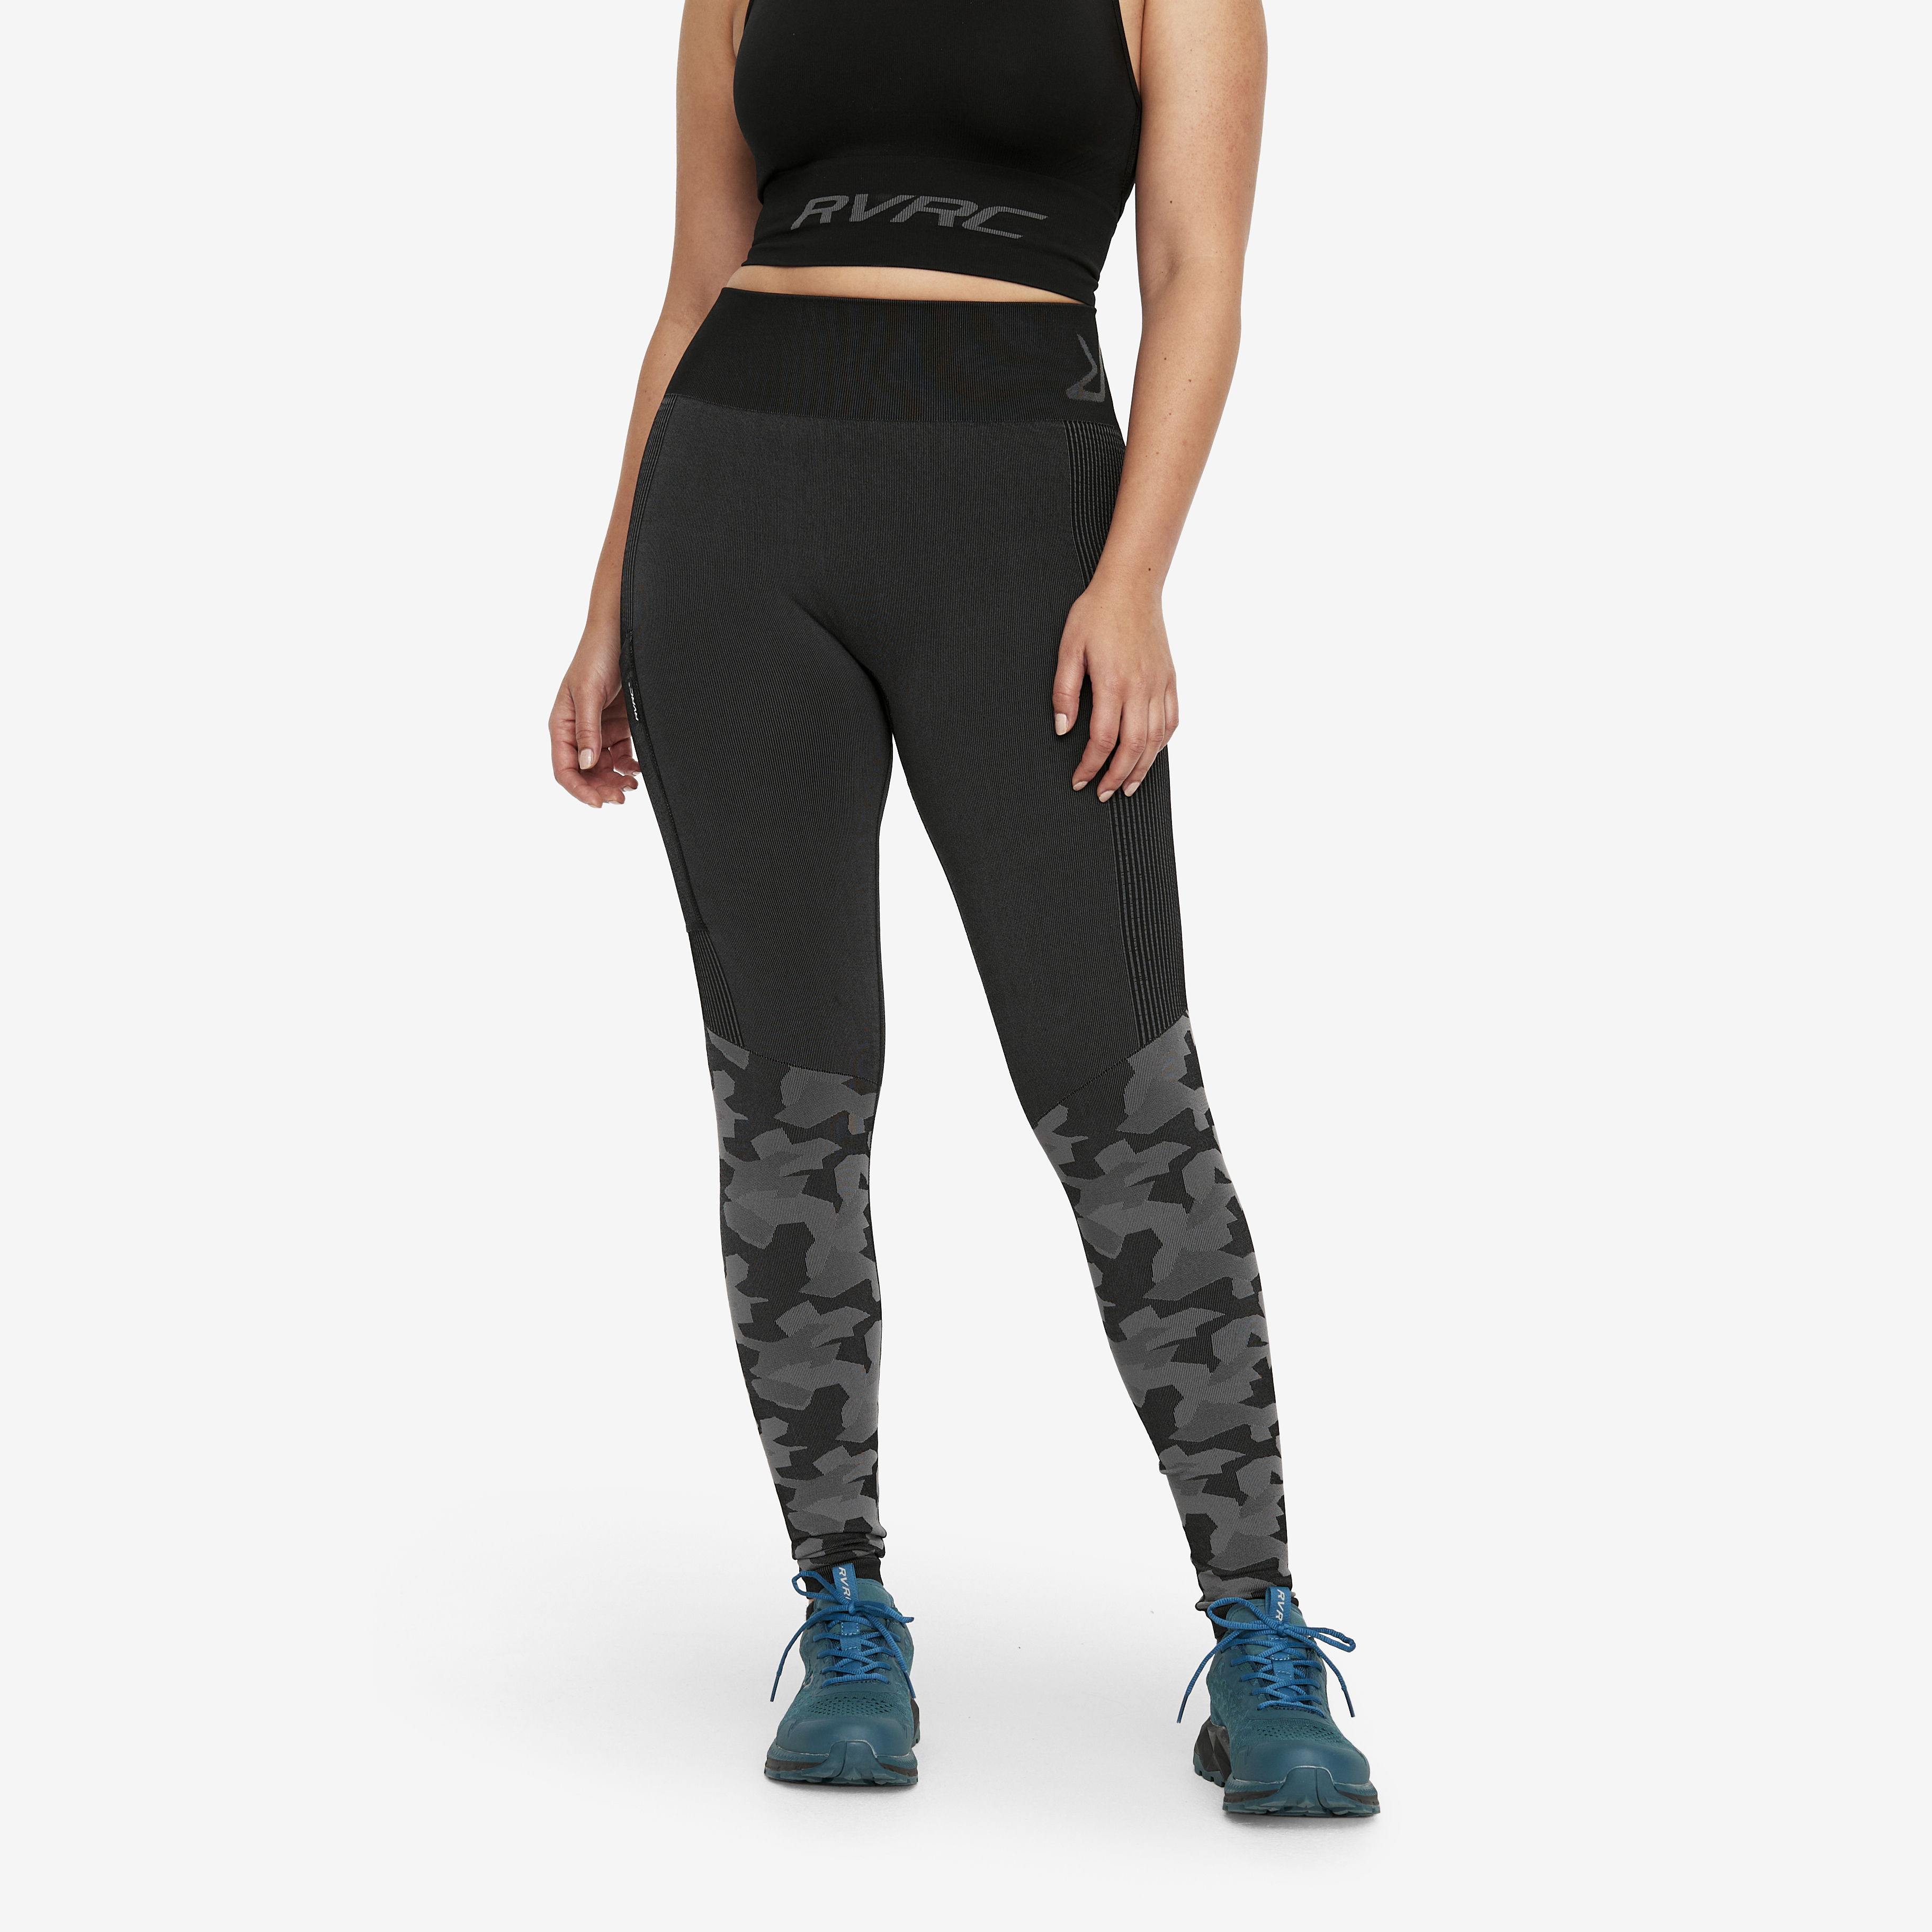 Gymshark Camo Seamless Leggings Black Size M - $29 (51% Off Retail